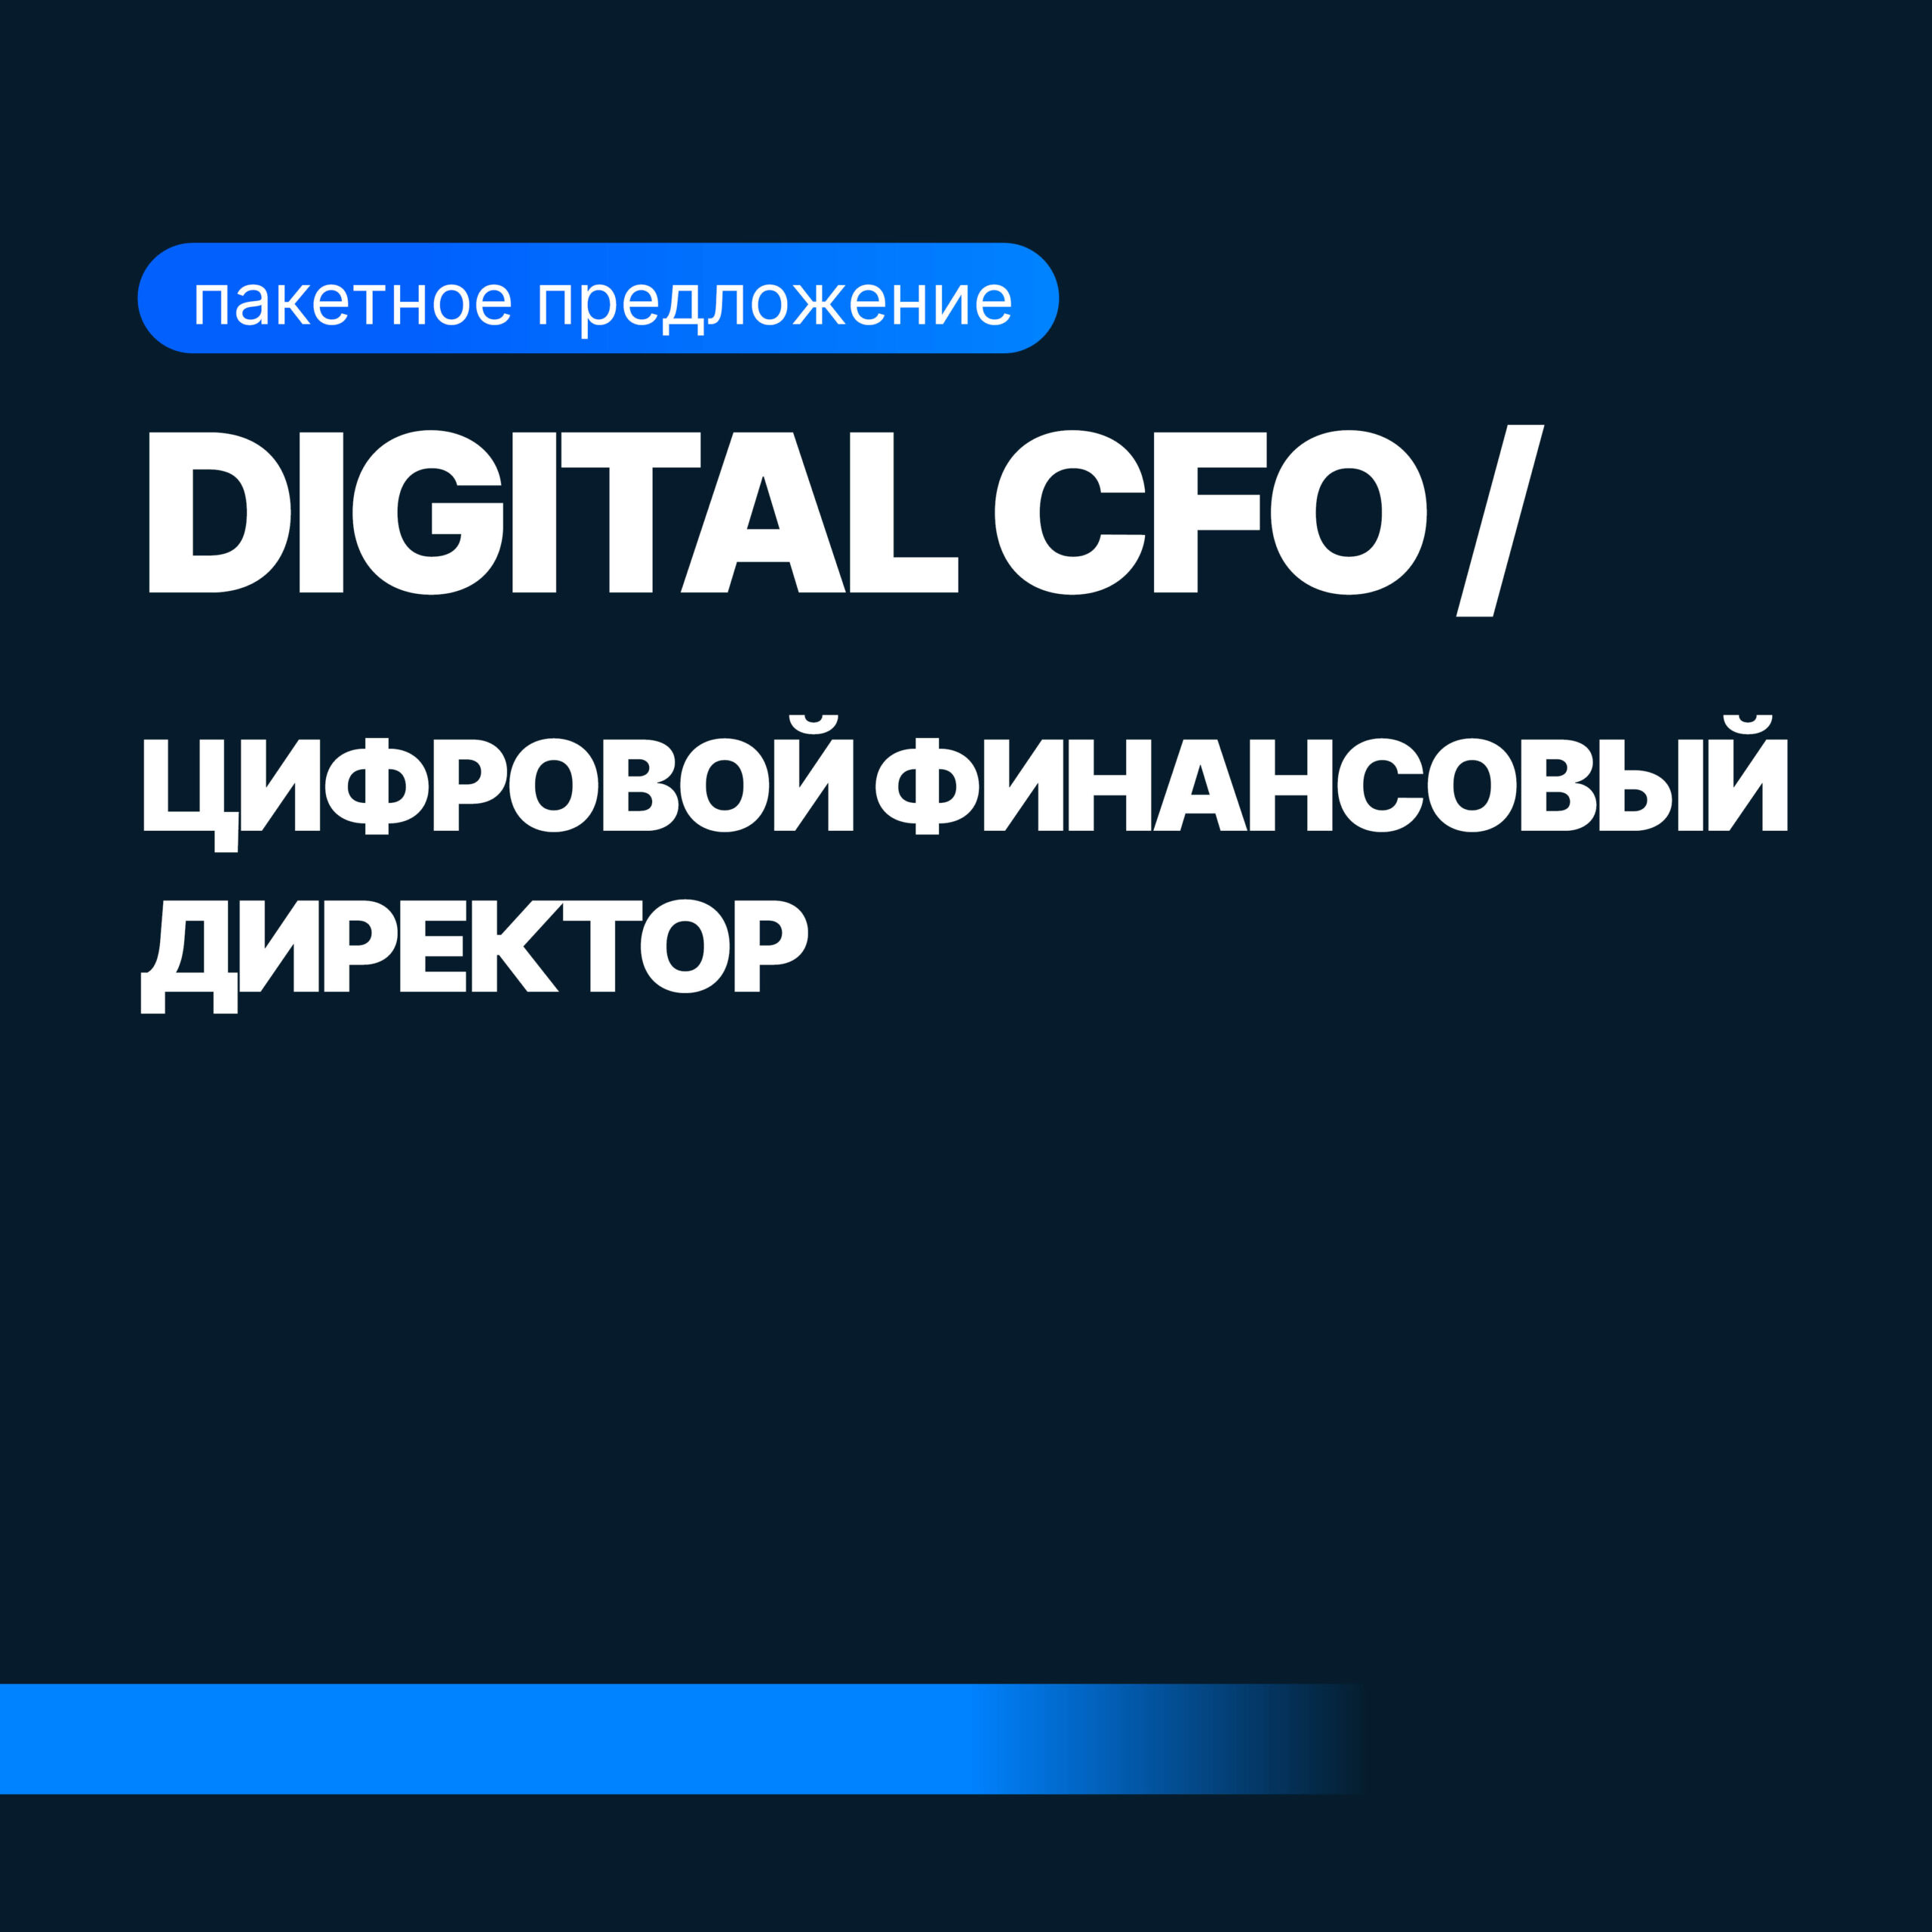 Digital CFO (Финансовый Директор + Бизнес-аналитик) бизнес аналитик мастер